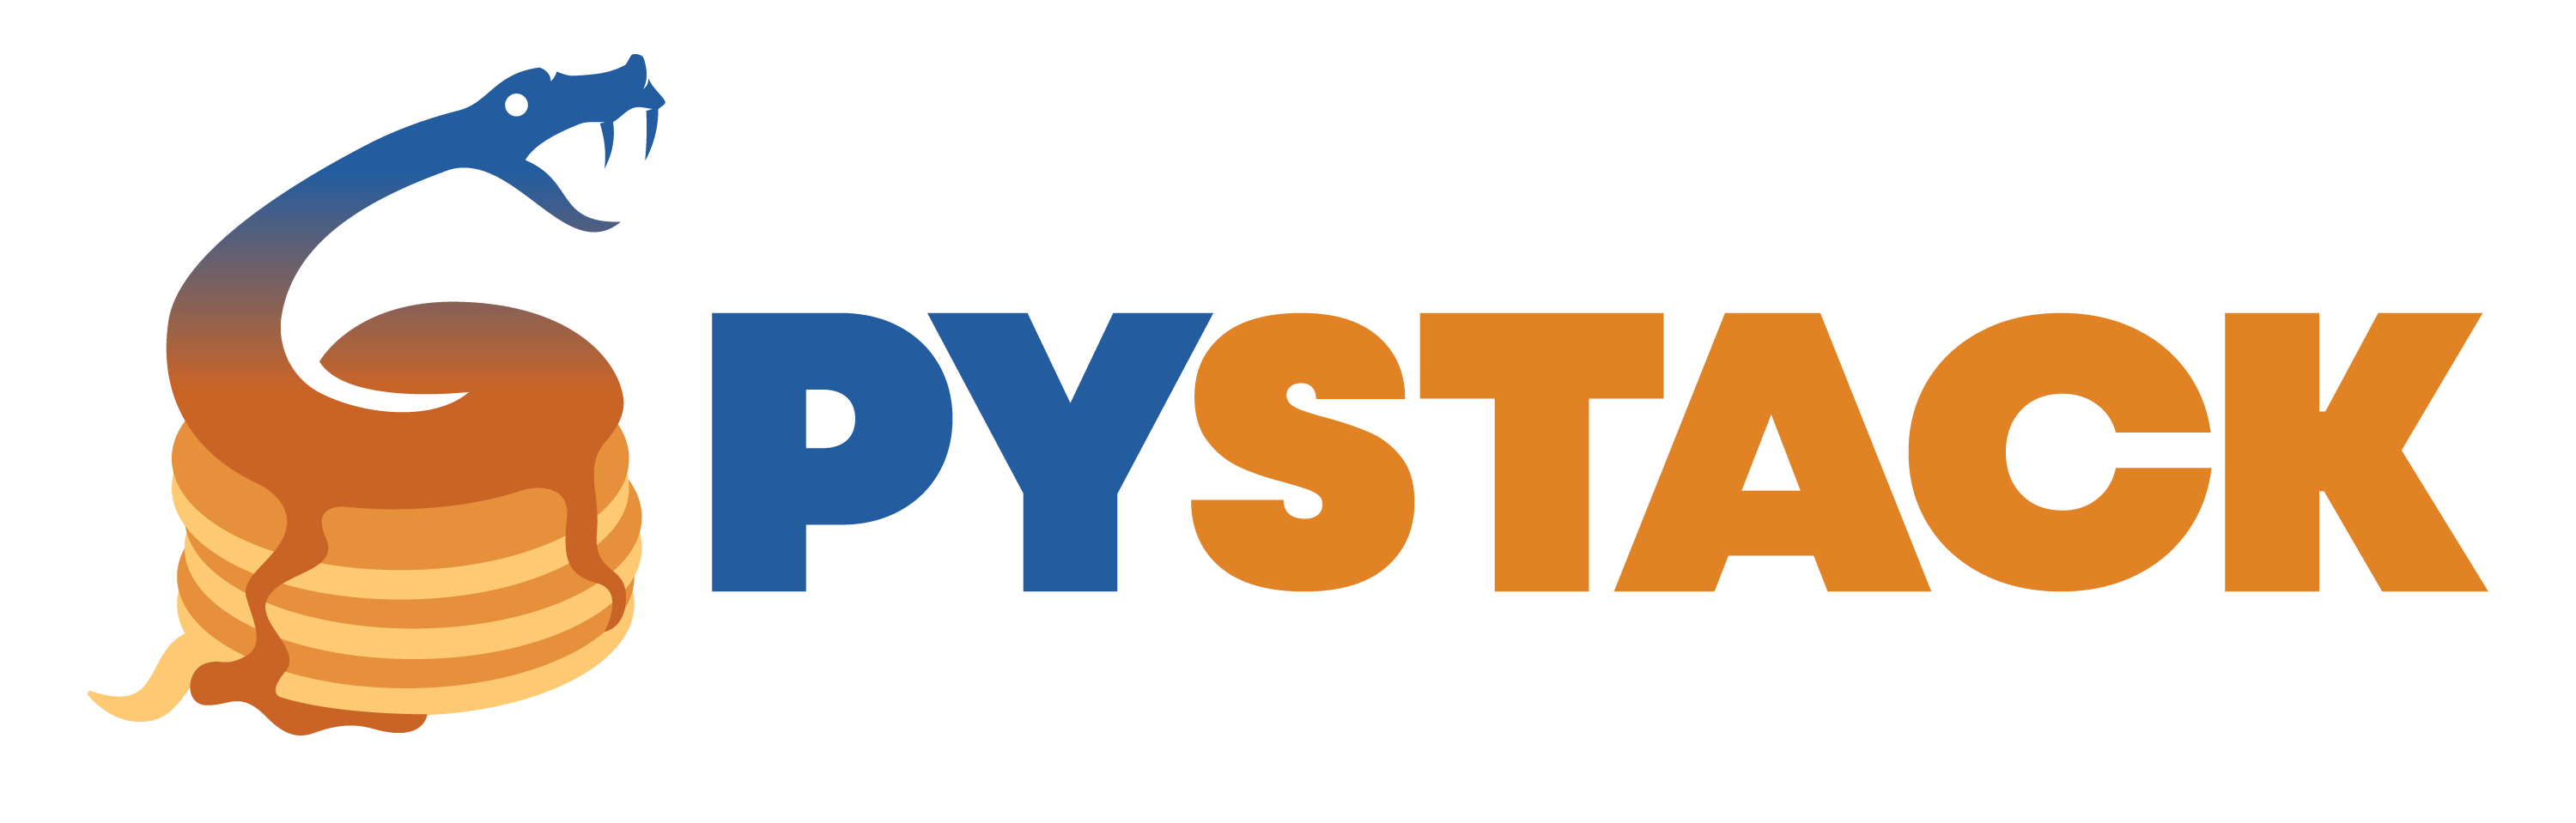 PyStack logo